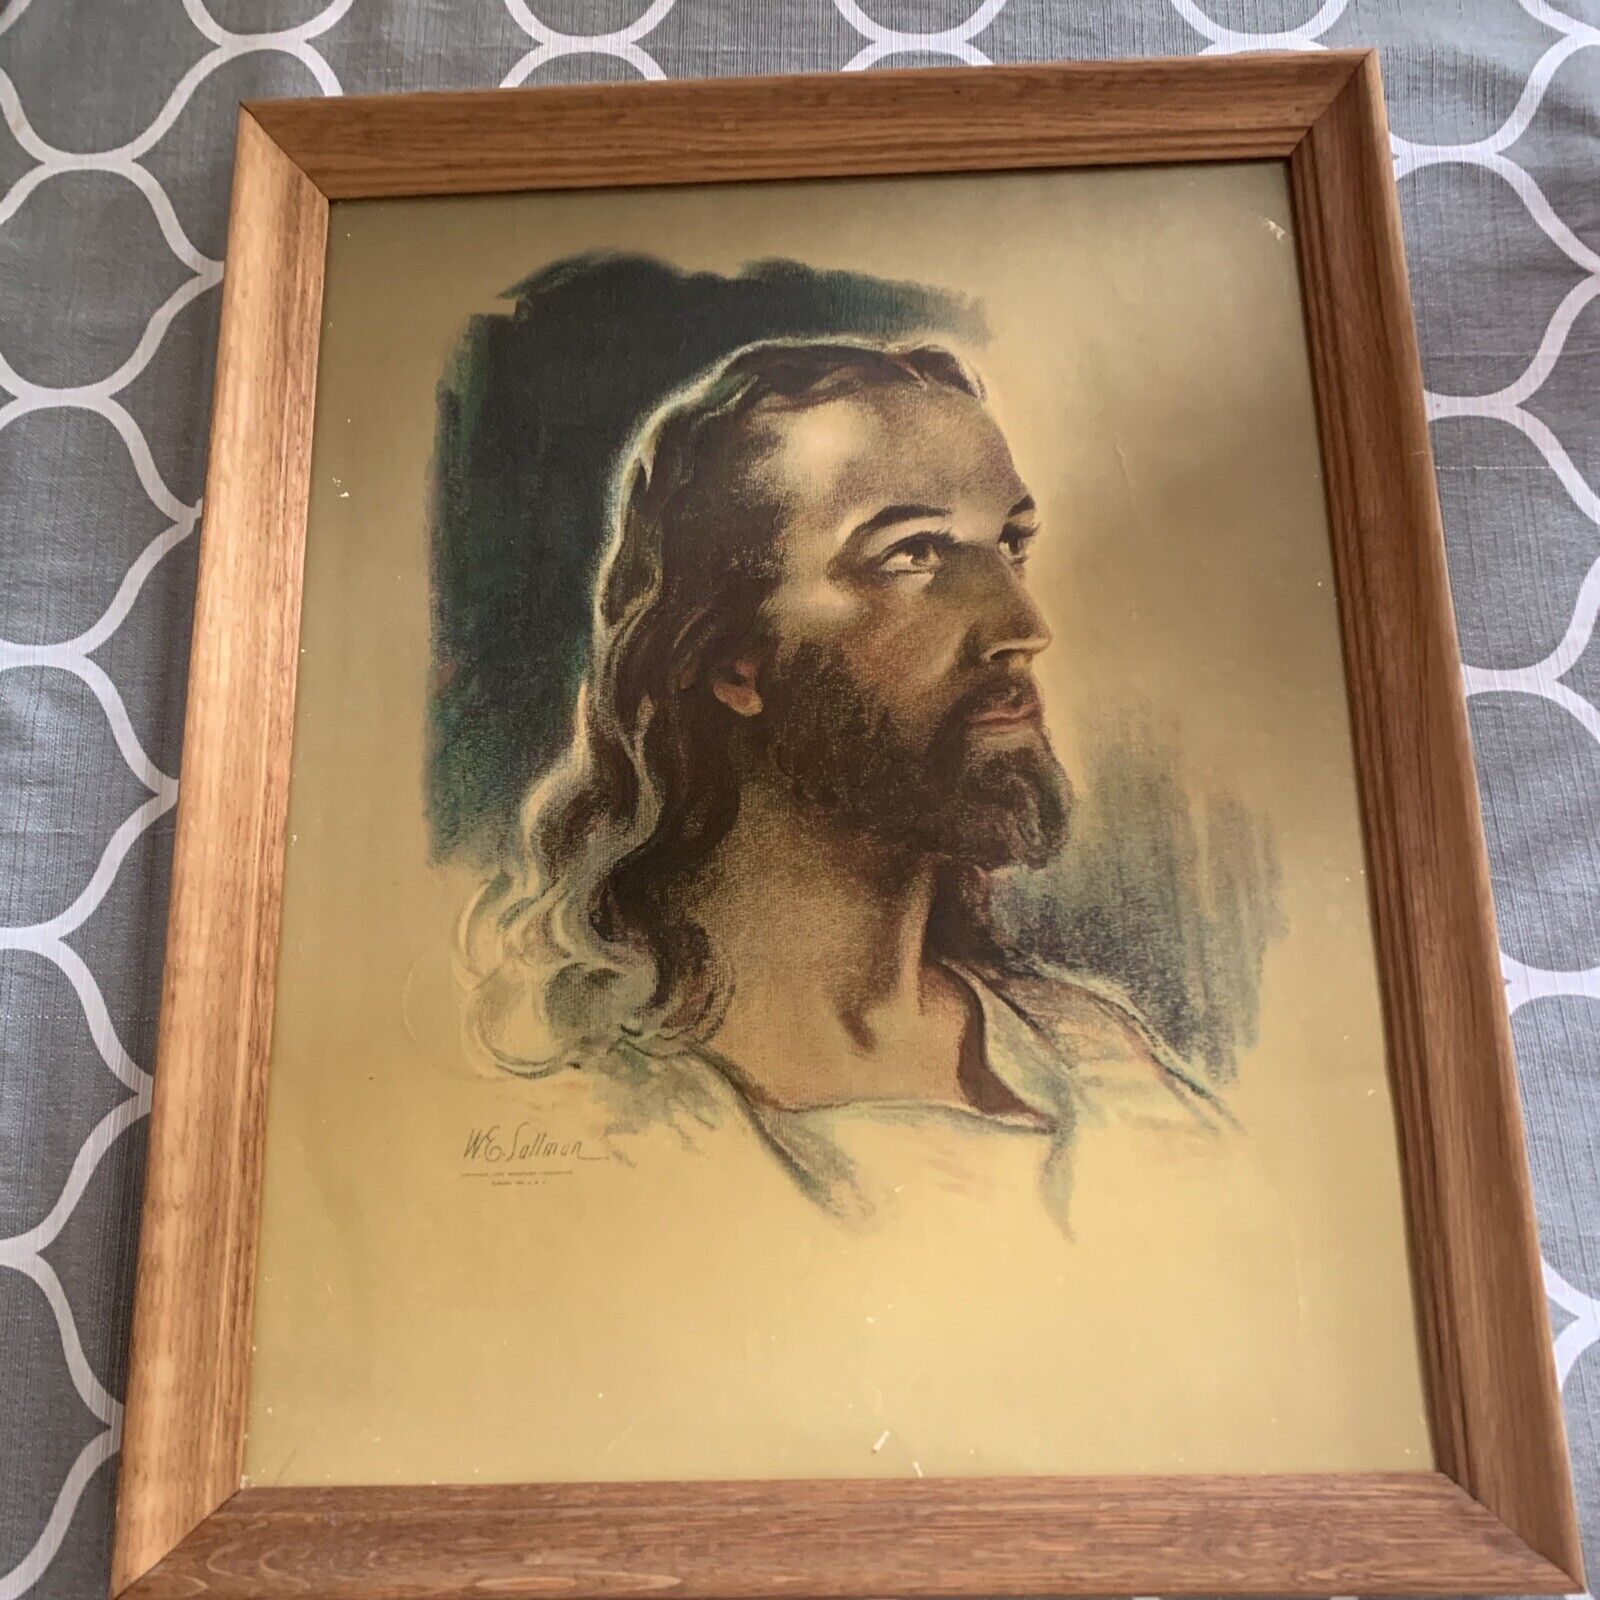 W.E. Sallman 1935 Print Of Jesus Christ 10x13 Wood Frame Auburn U.S.A.